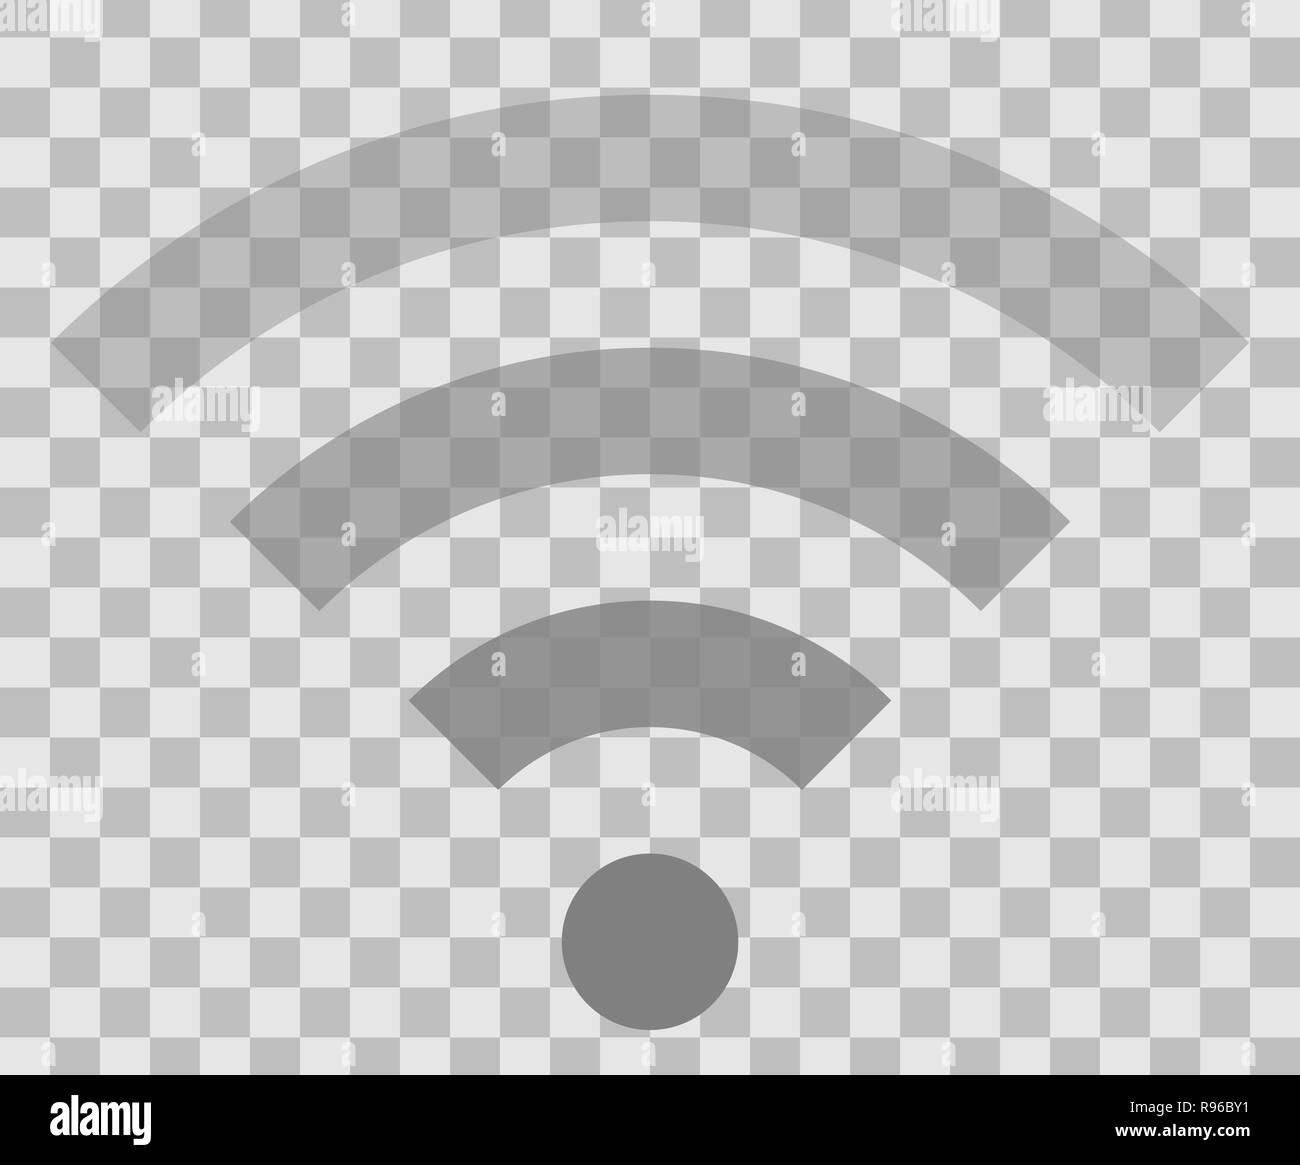 Wifi symbol icon - medium gray simple transparent, isolated - vector illustration Stock Vector